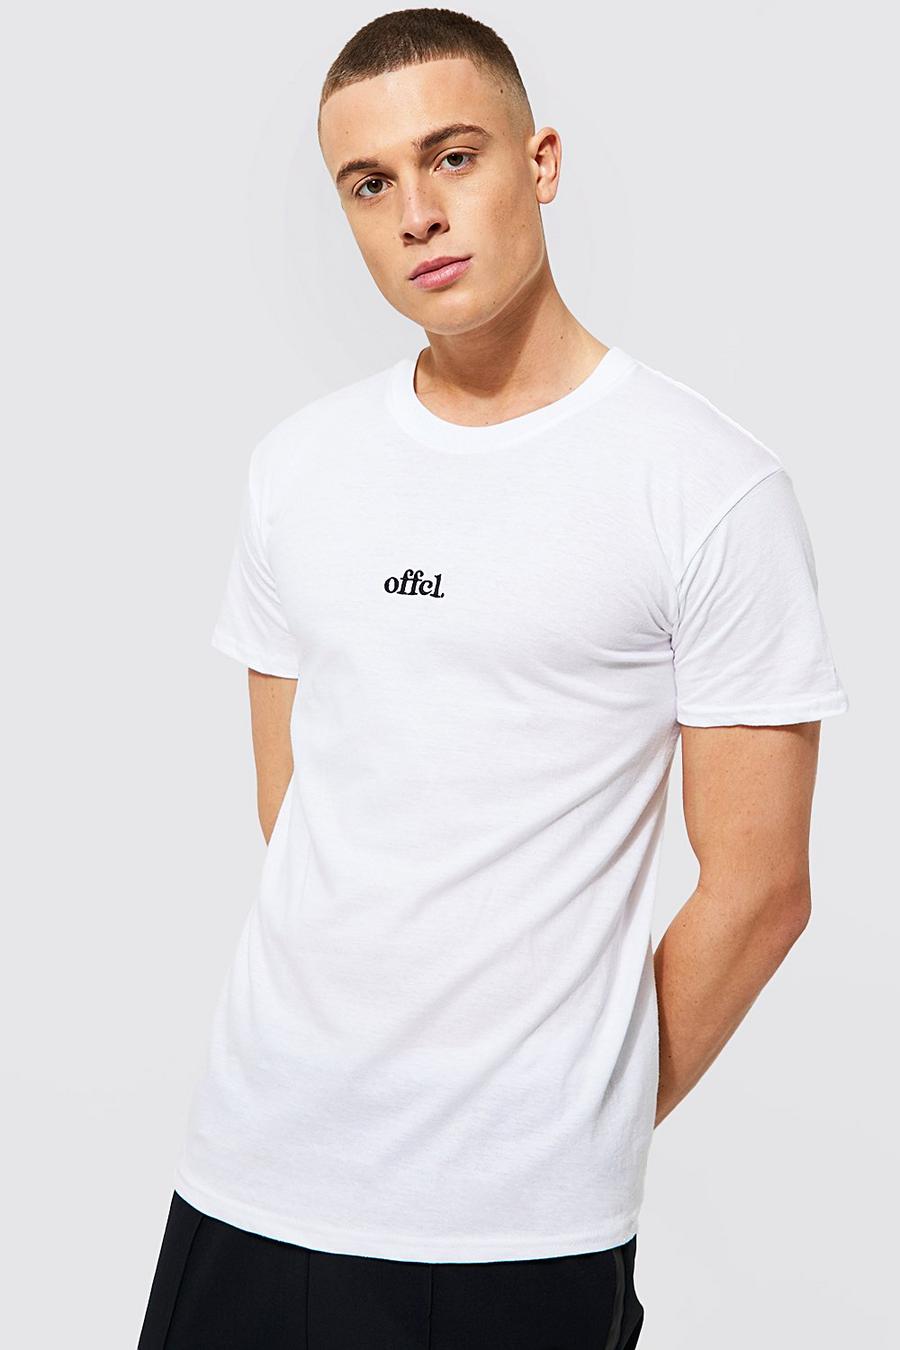 T-shirt Offcl con ricami, White bianco